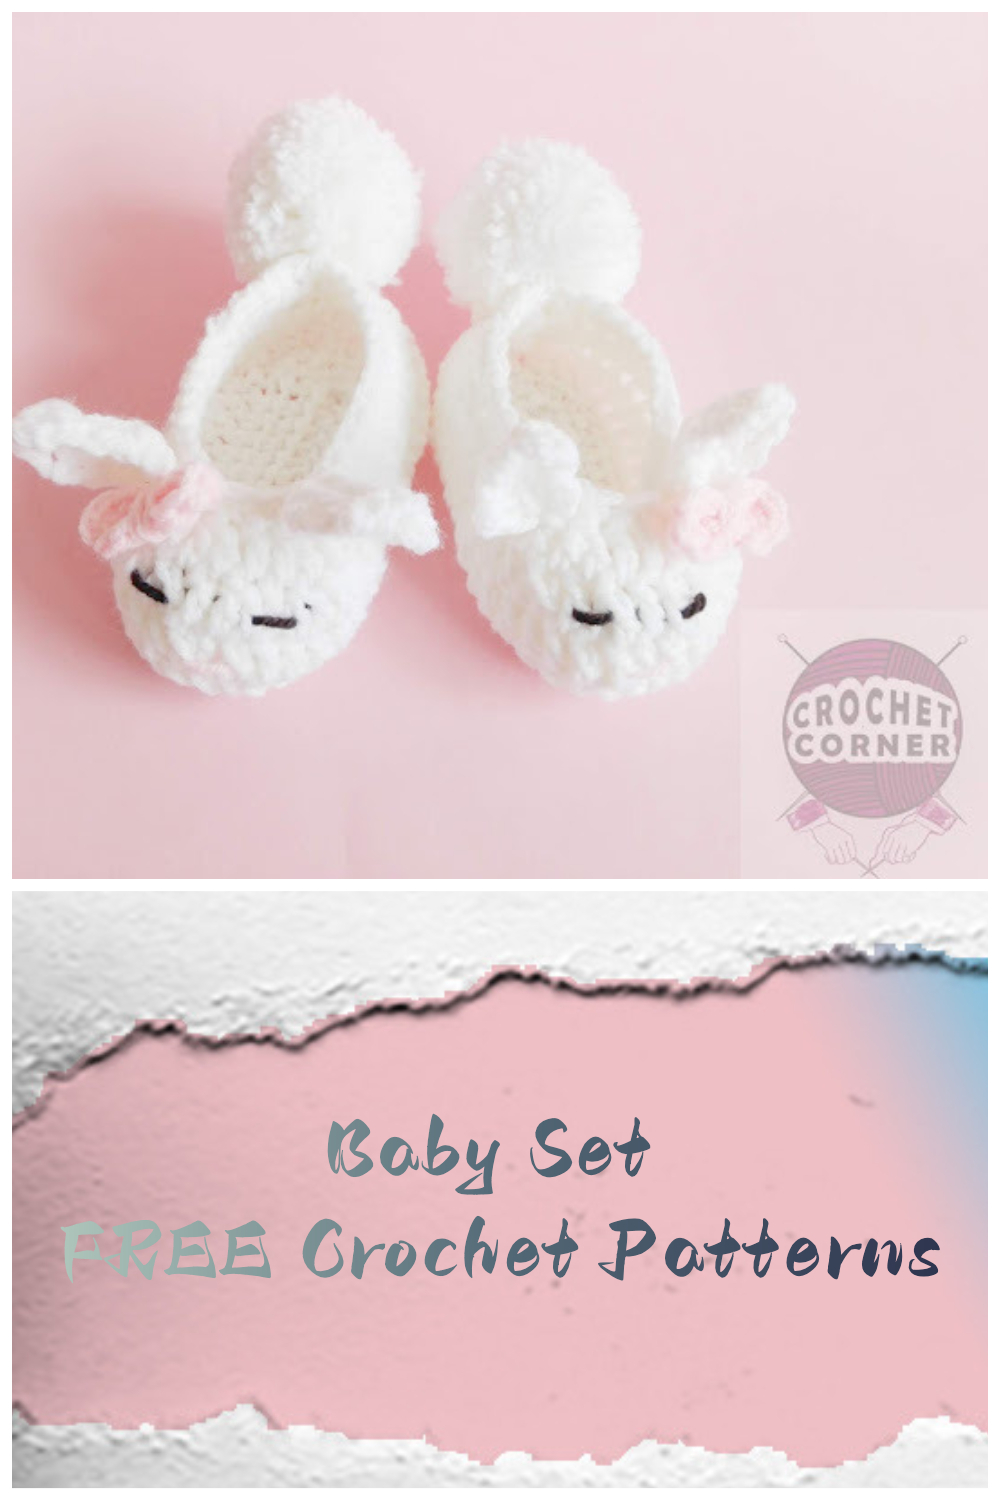 Baby Set FREE Crochet Patterns 